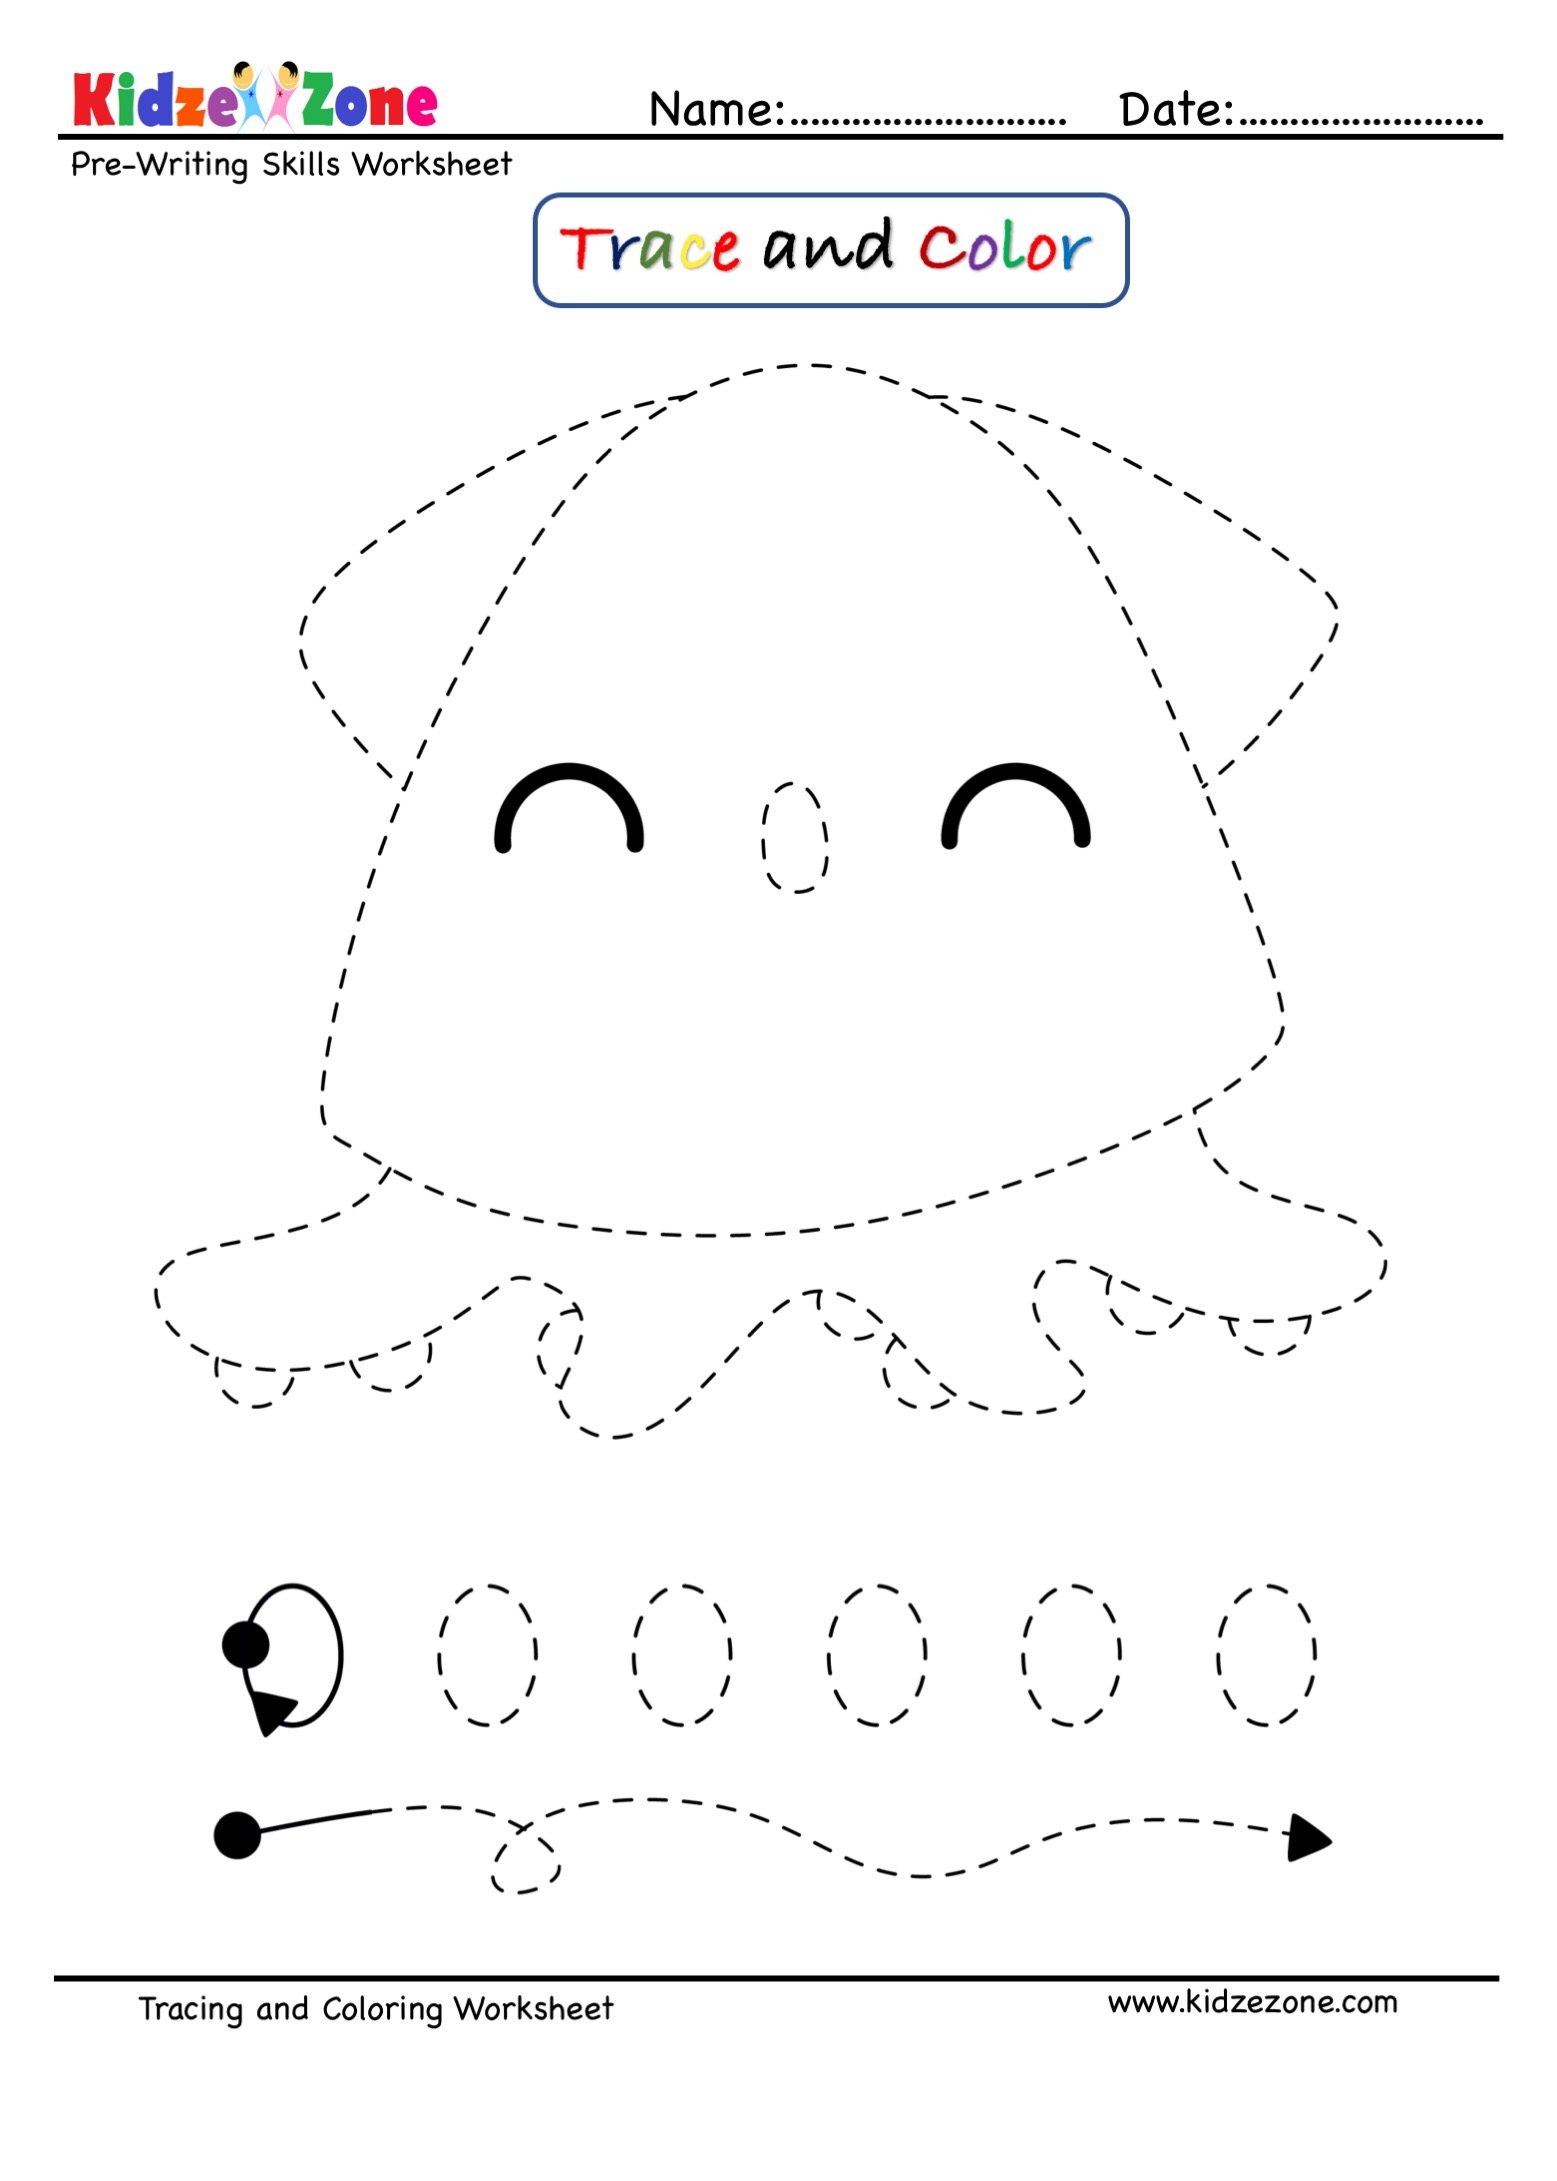 octopus-cartoon-trace-and-color-worksheet-kidzezone